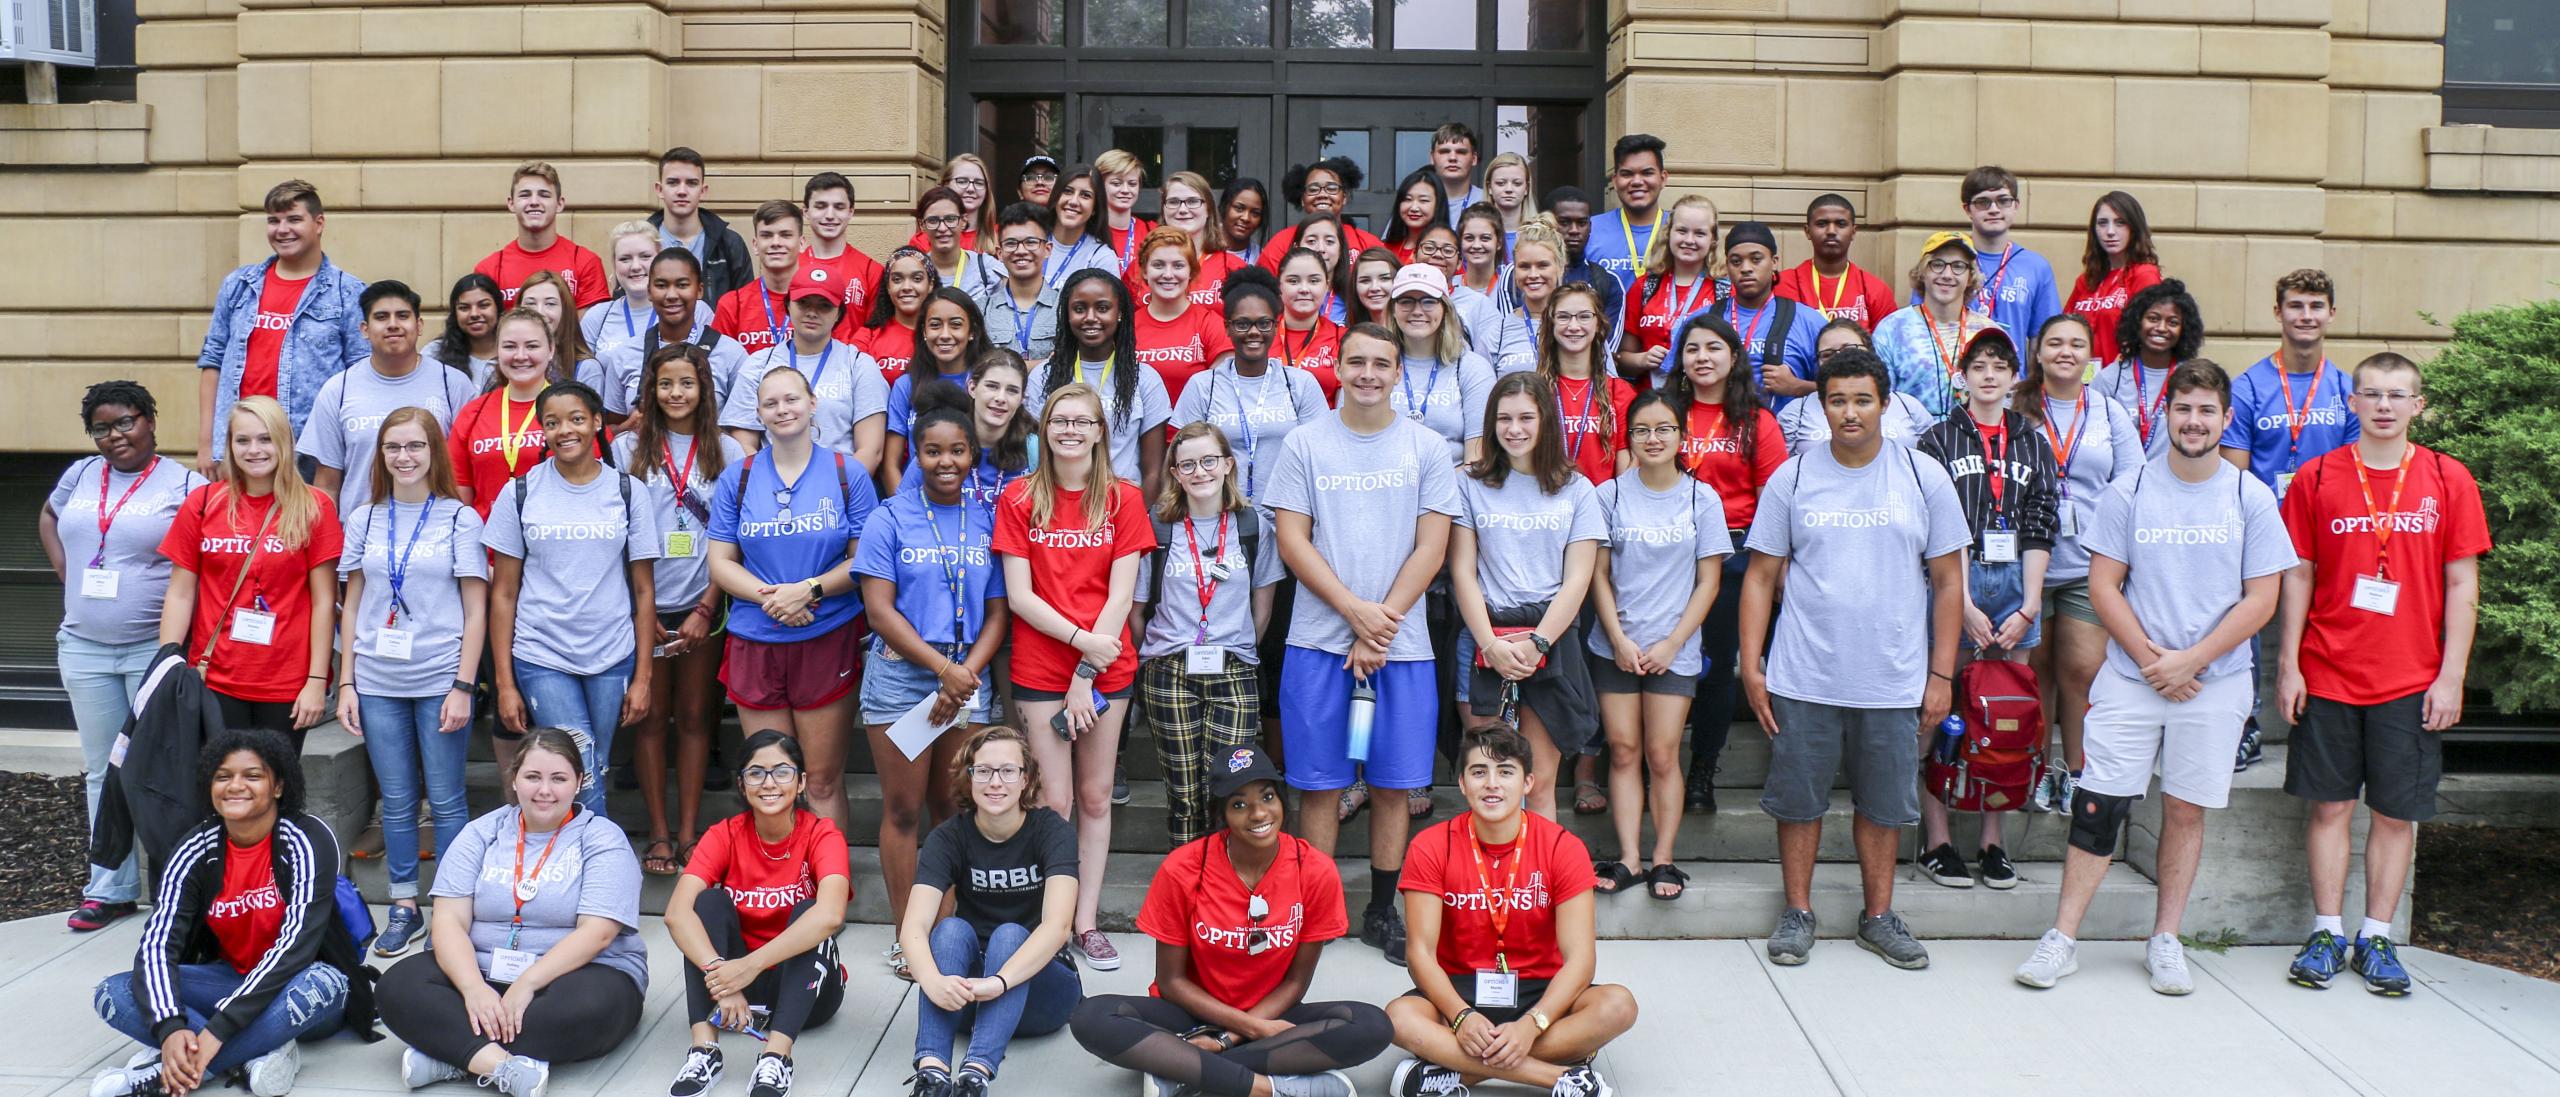 A large group of diverse undergraduates wearing matching shirts.